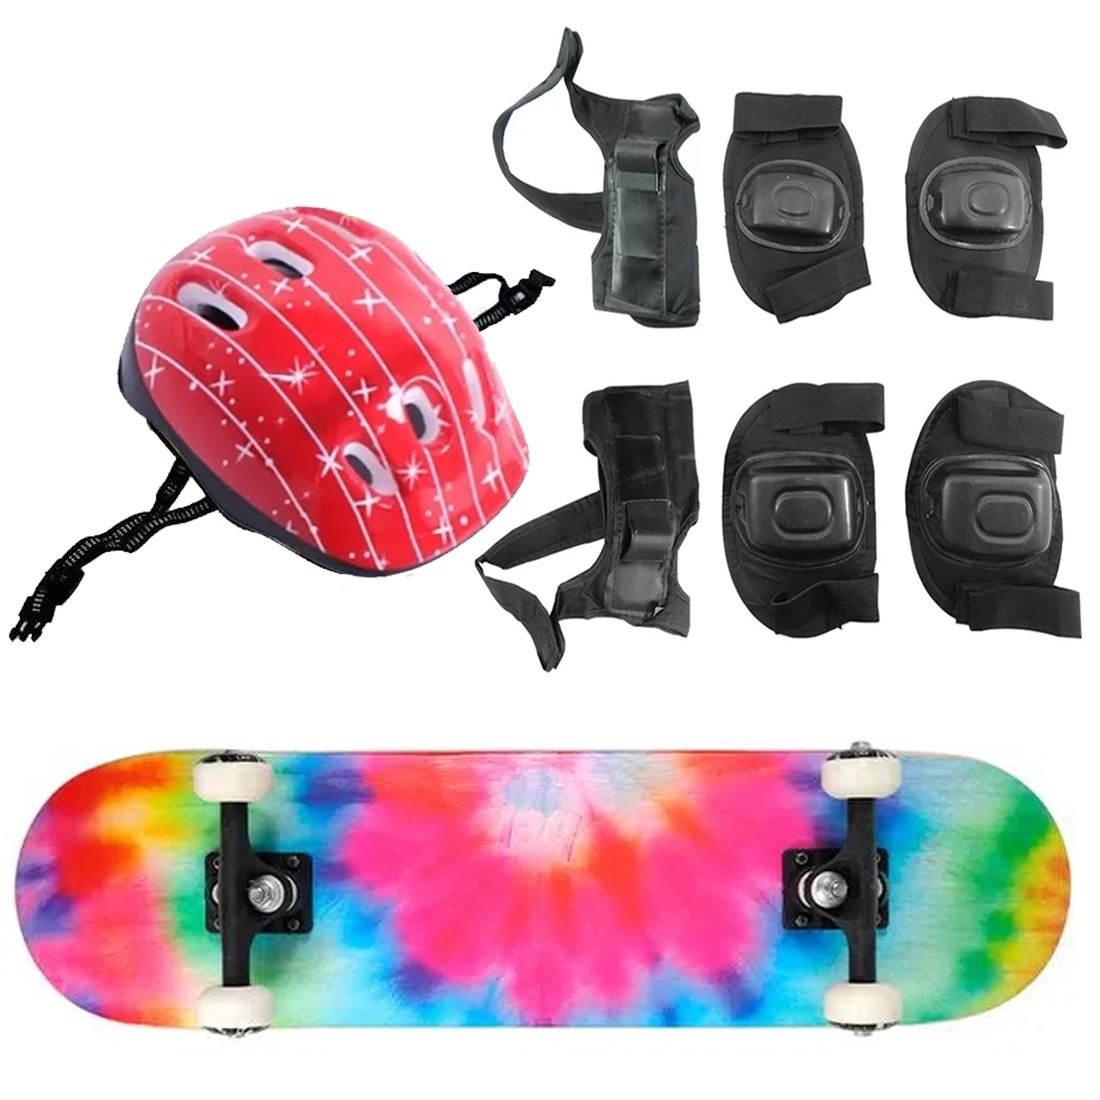 Skate Semi Profissional + Kit Proteção Completo - Estampa Colorido - 4 -  Real Brinquedos